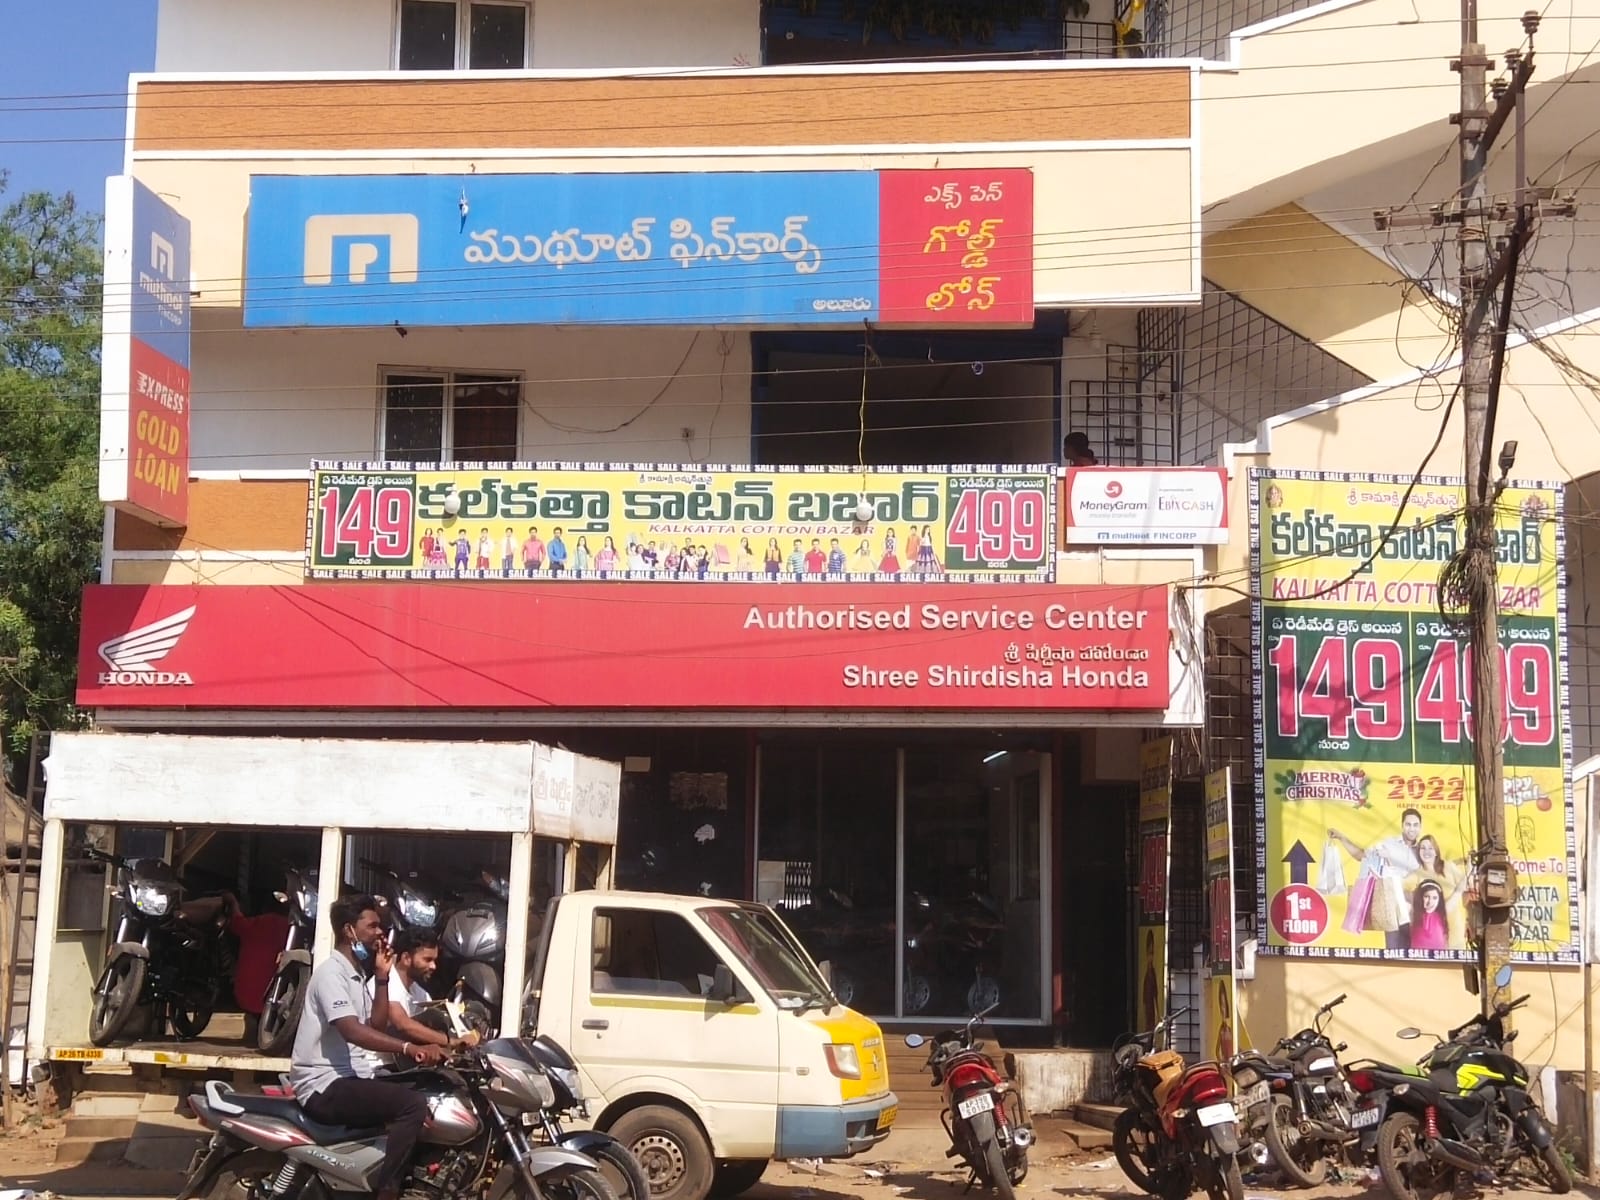 Muthoot Fincorp Gold Loan Services in Allur, Nellore, Andhra Pradesh